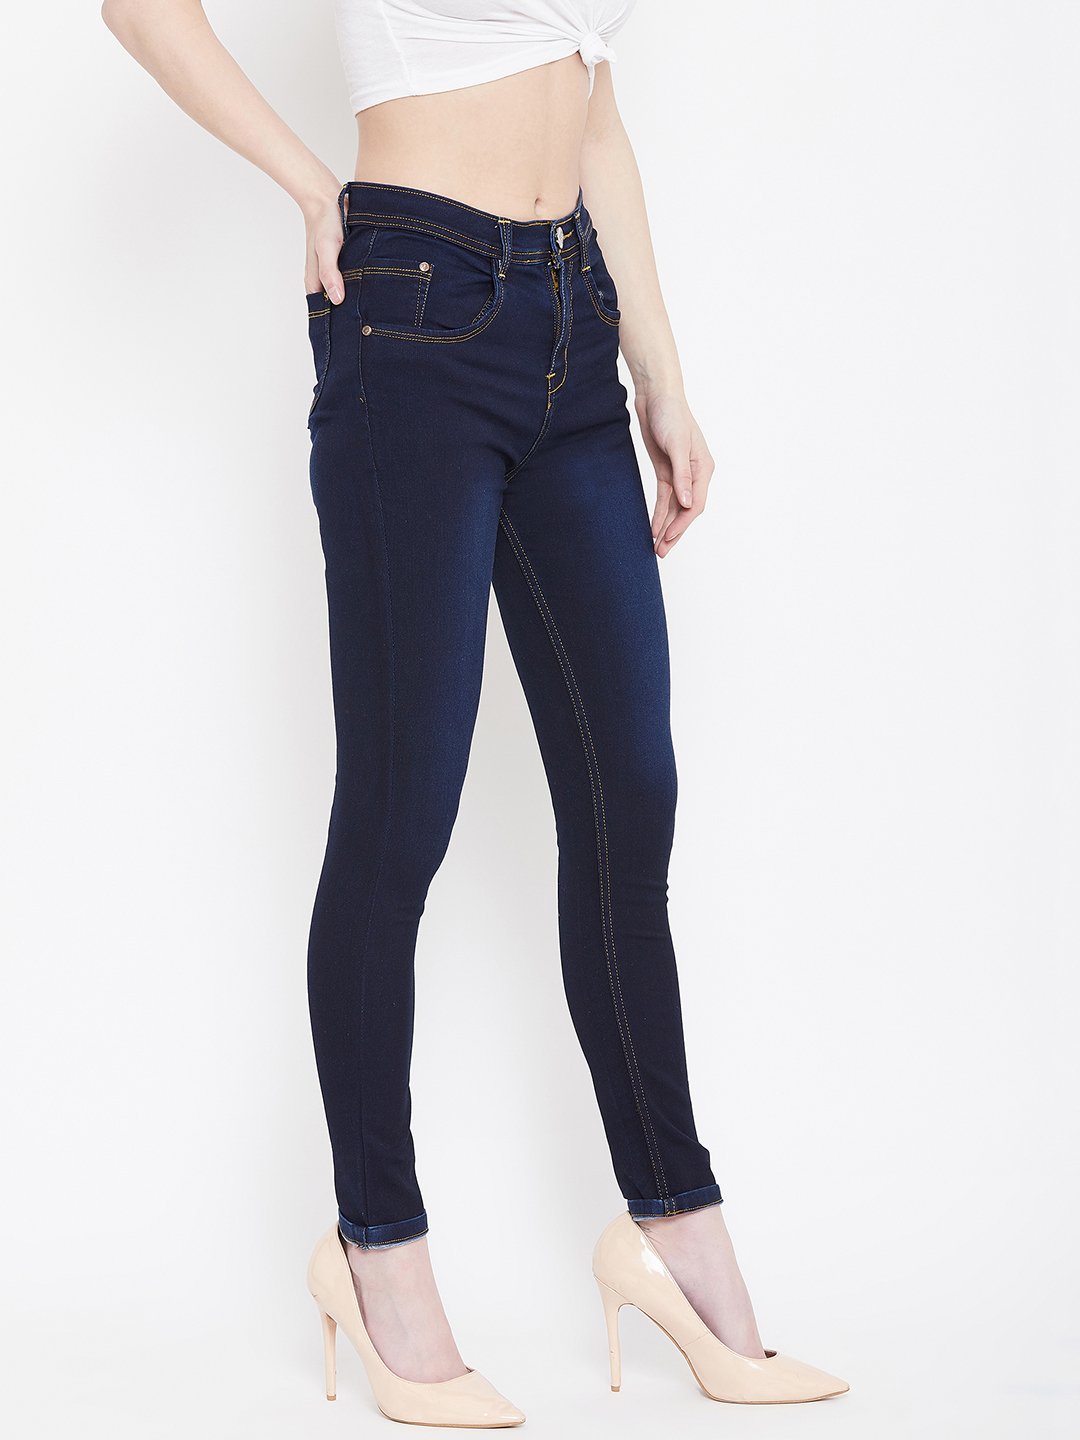 High Waist Stretchable Basic Blue Jeans - NiftyJeans